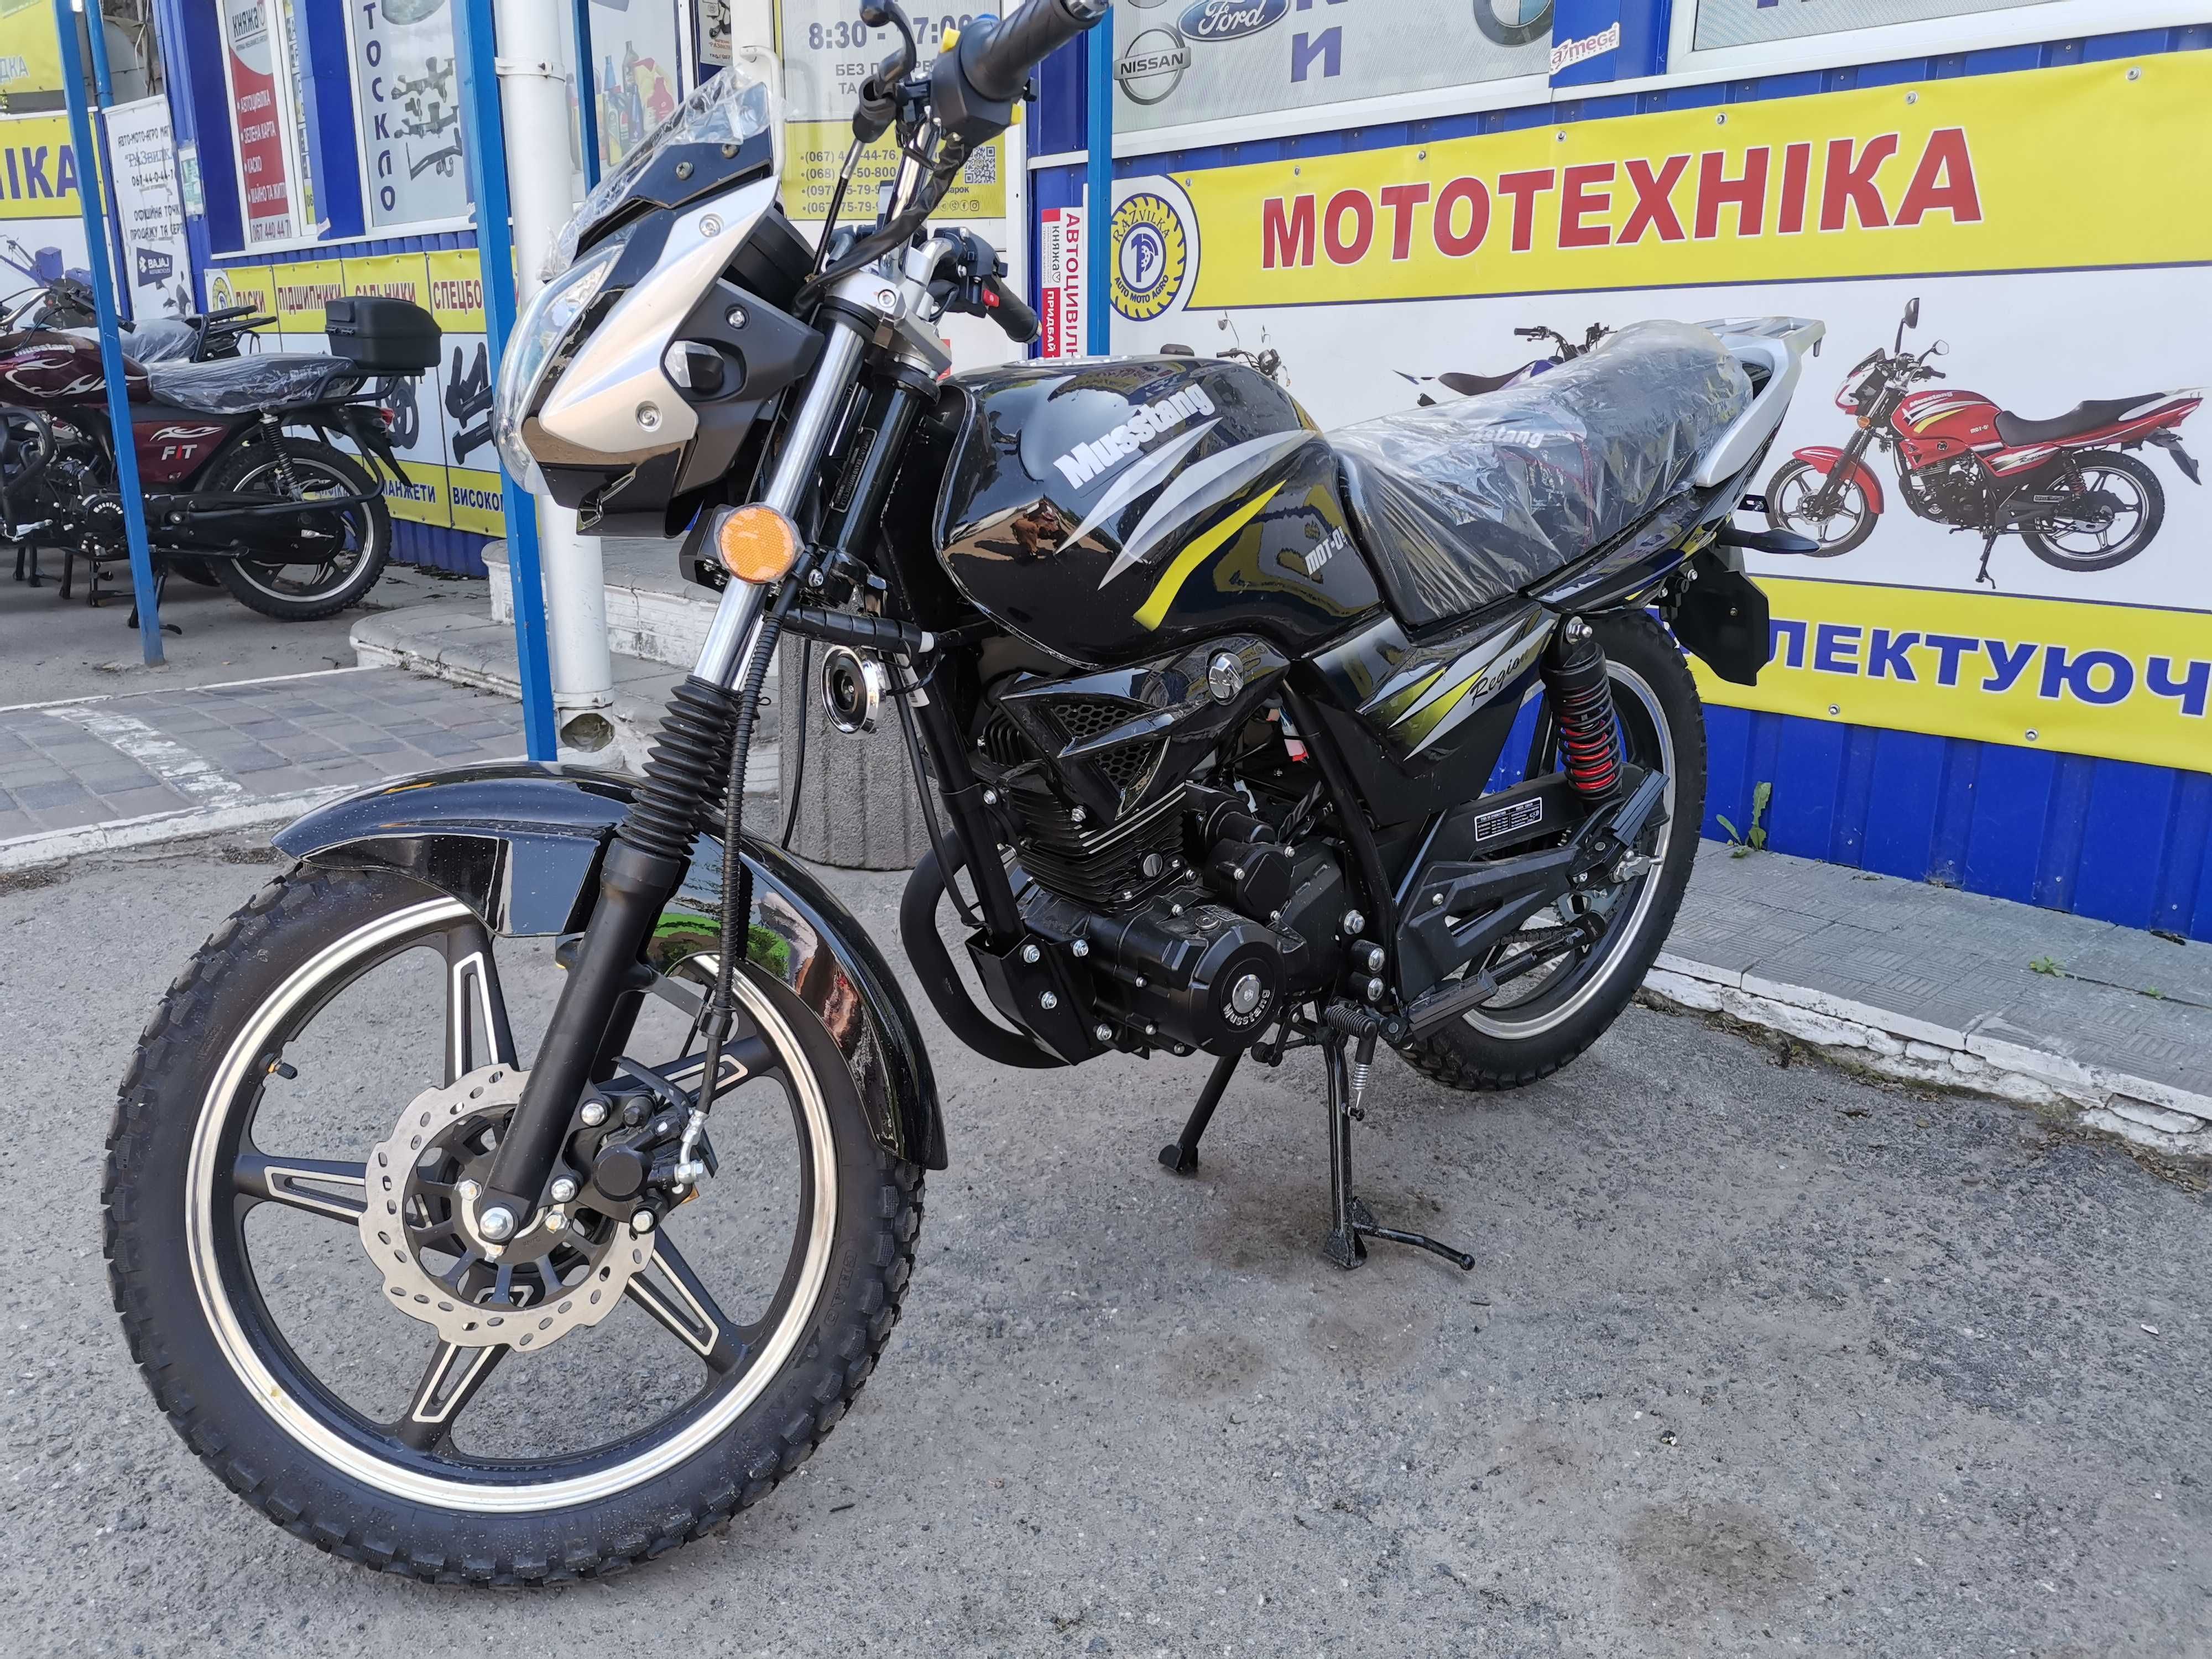 Мотоцикл Region Musstang 150 доставка безкоштовна 100км